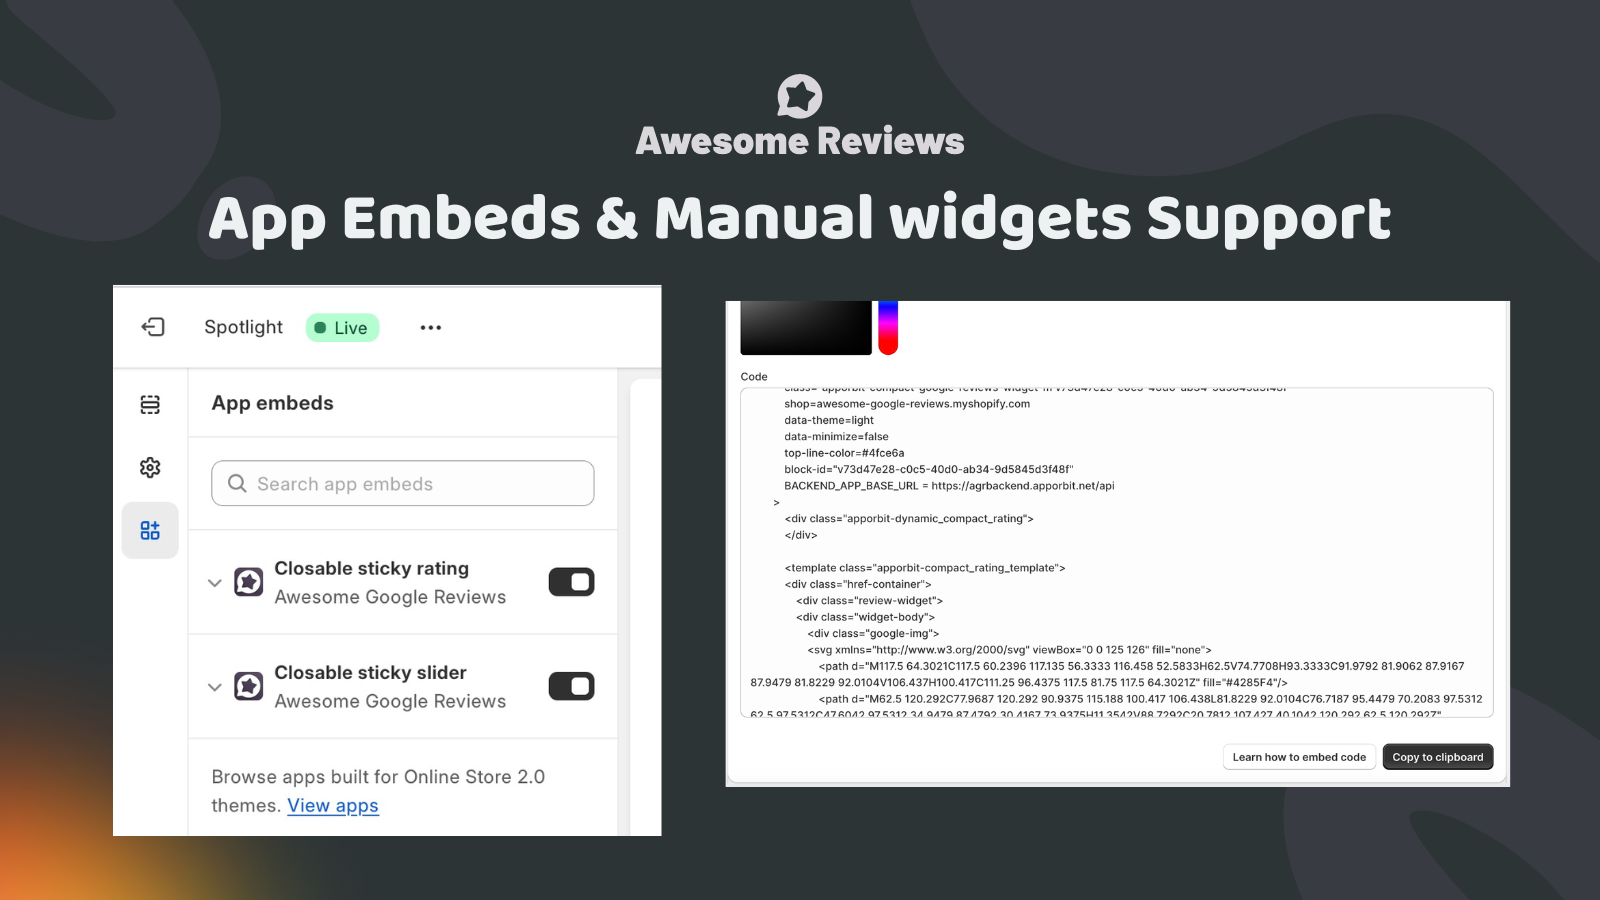 App Embeds & Manual widgets Support